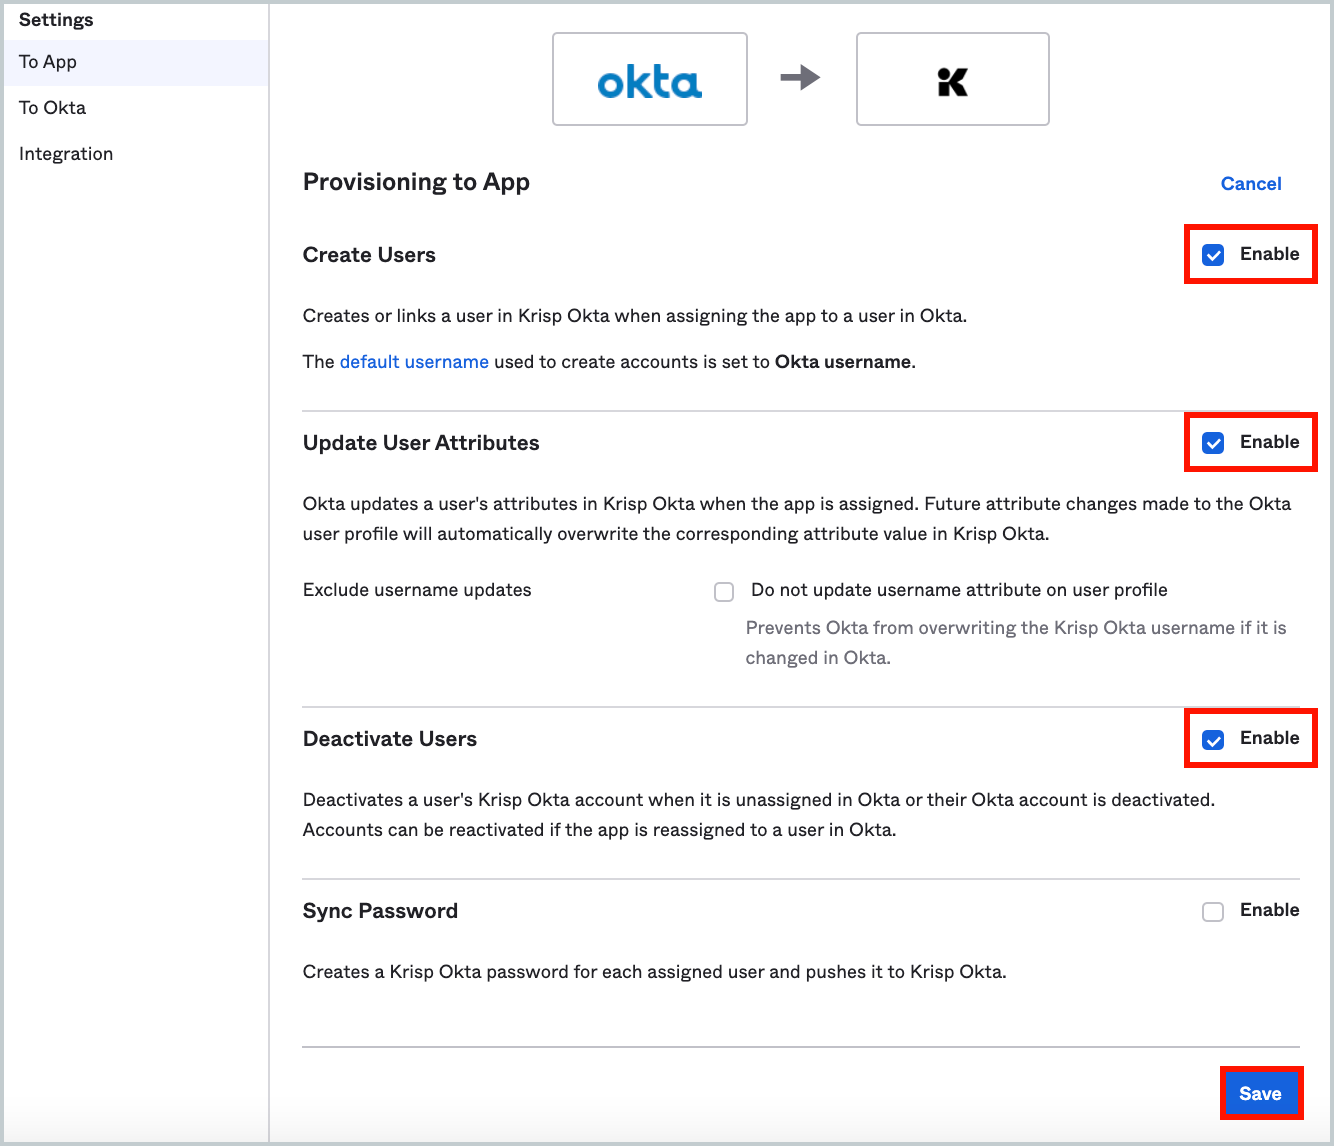 okta_to_app_enable.png